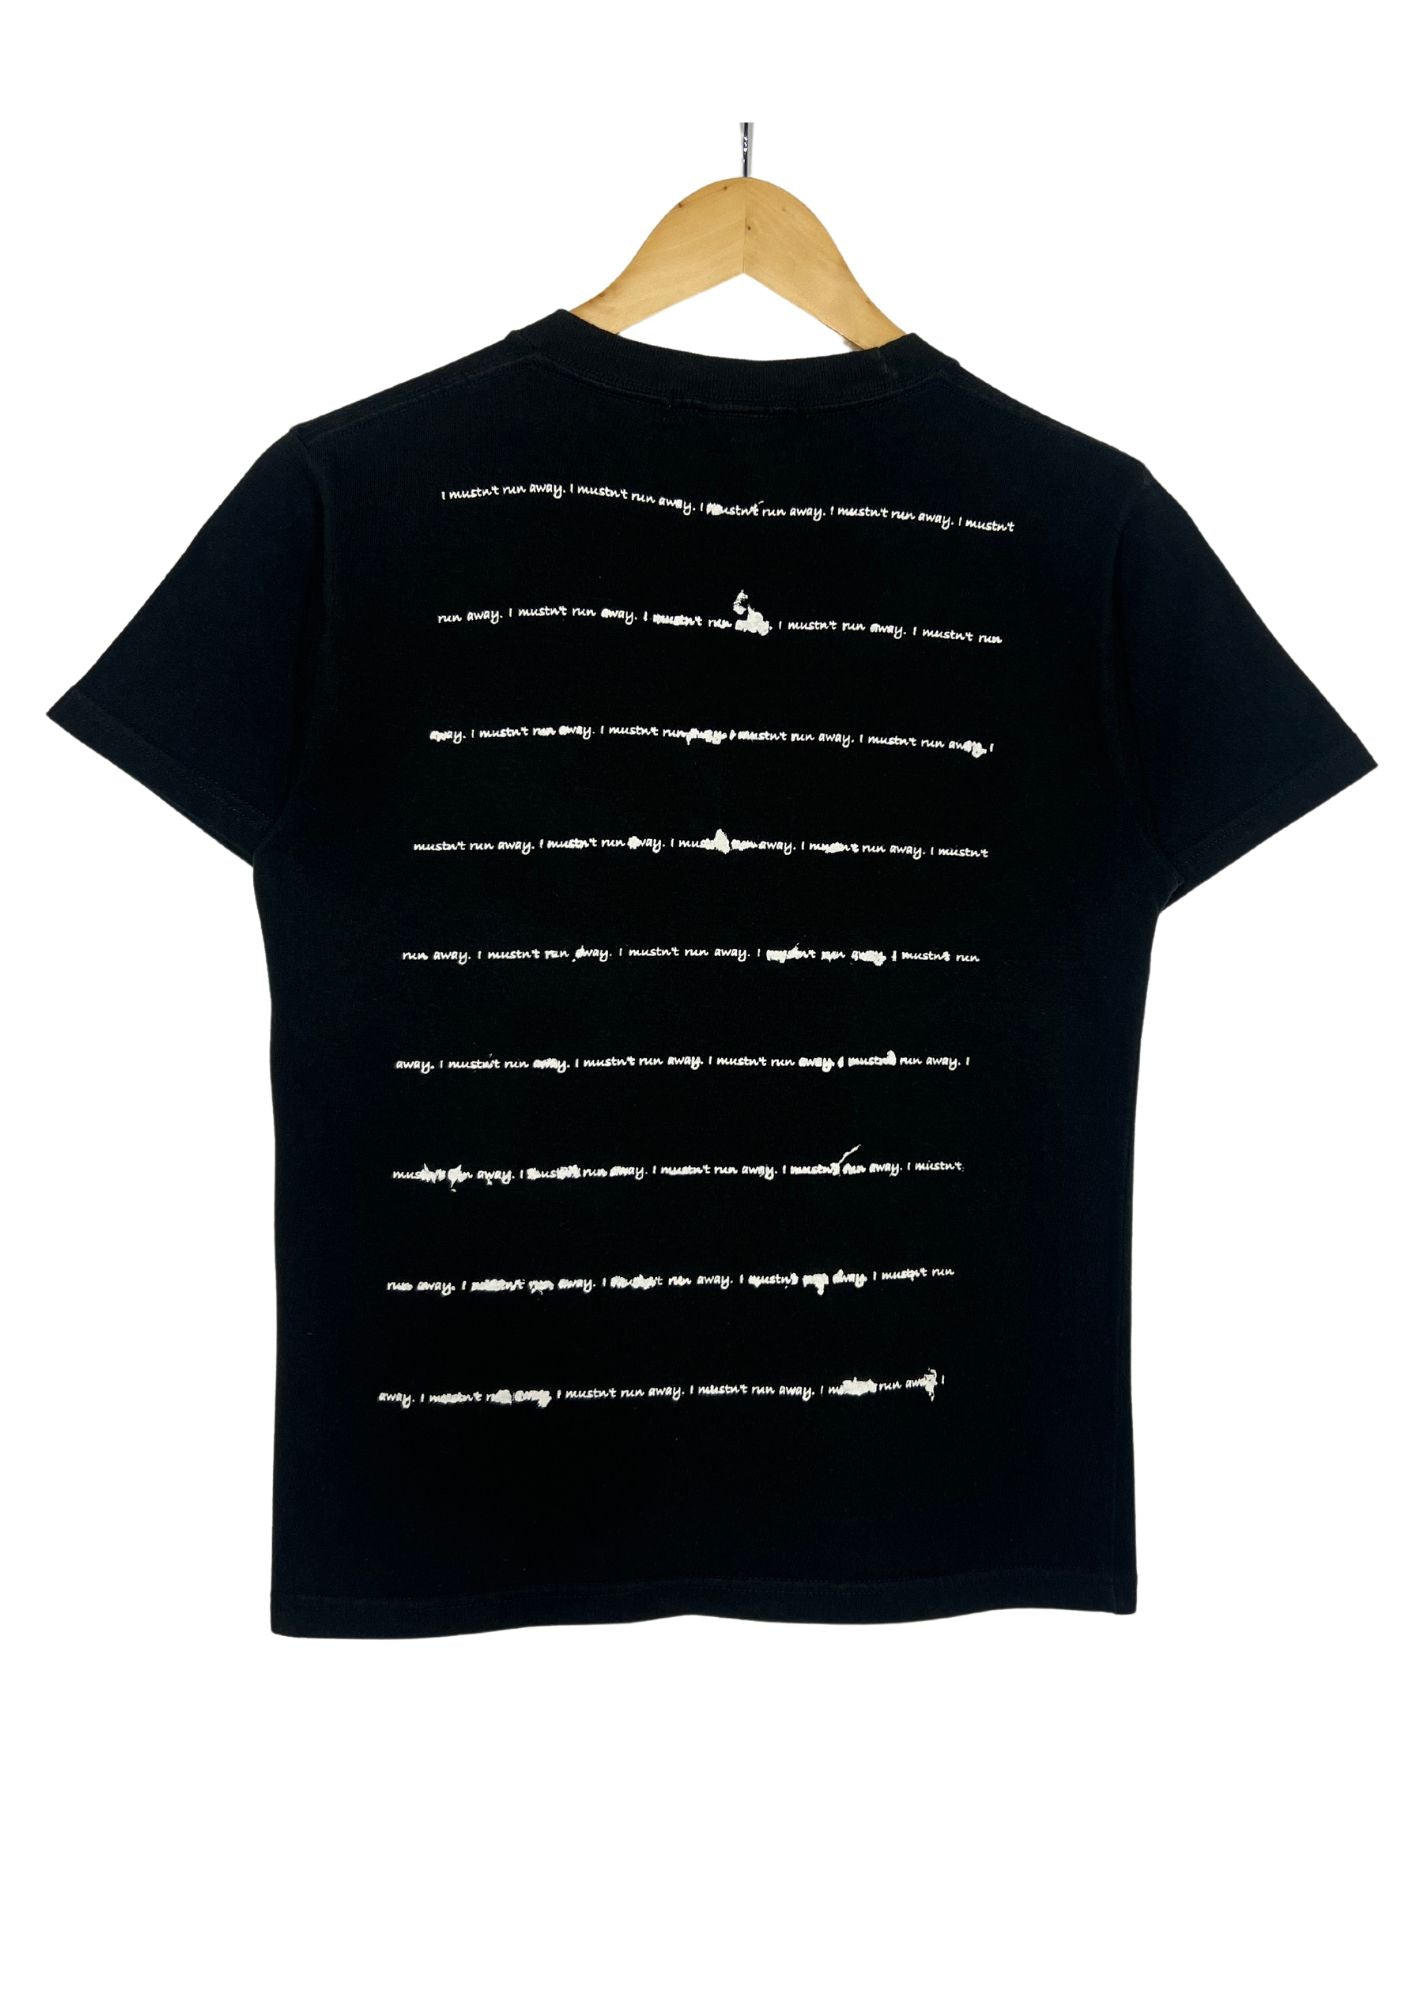 00s Neon Genesis Evangelion x BEAMS EVA 01 T-shirt